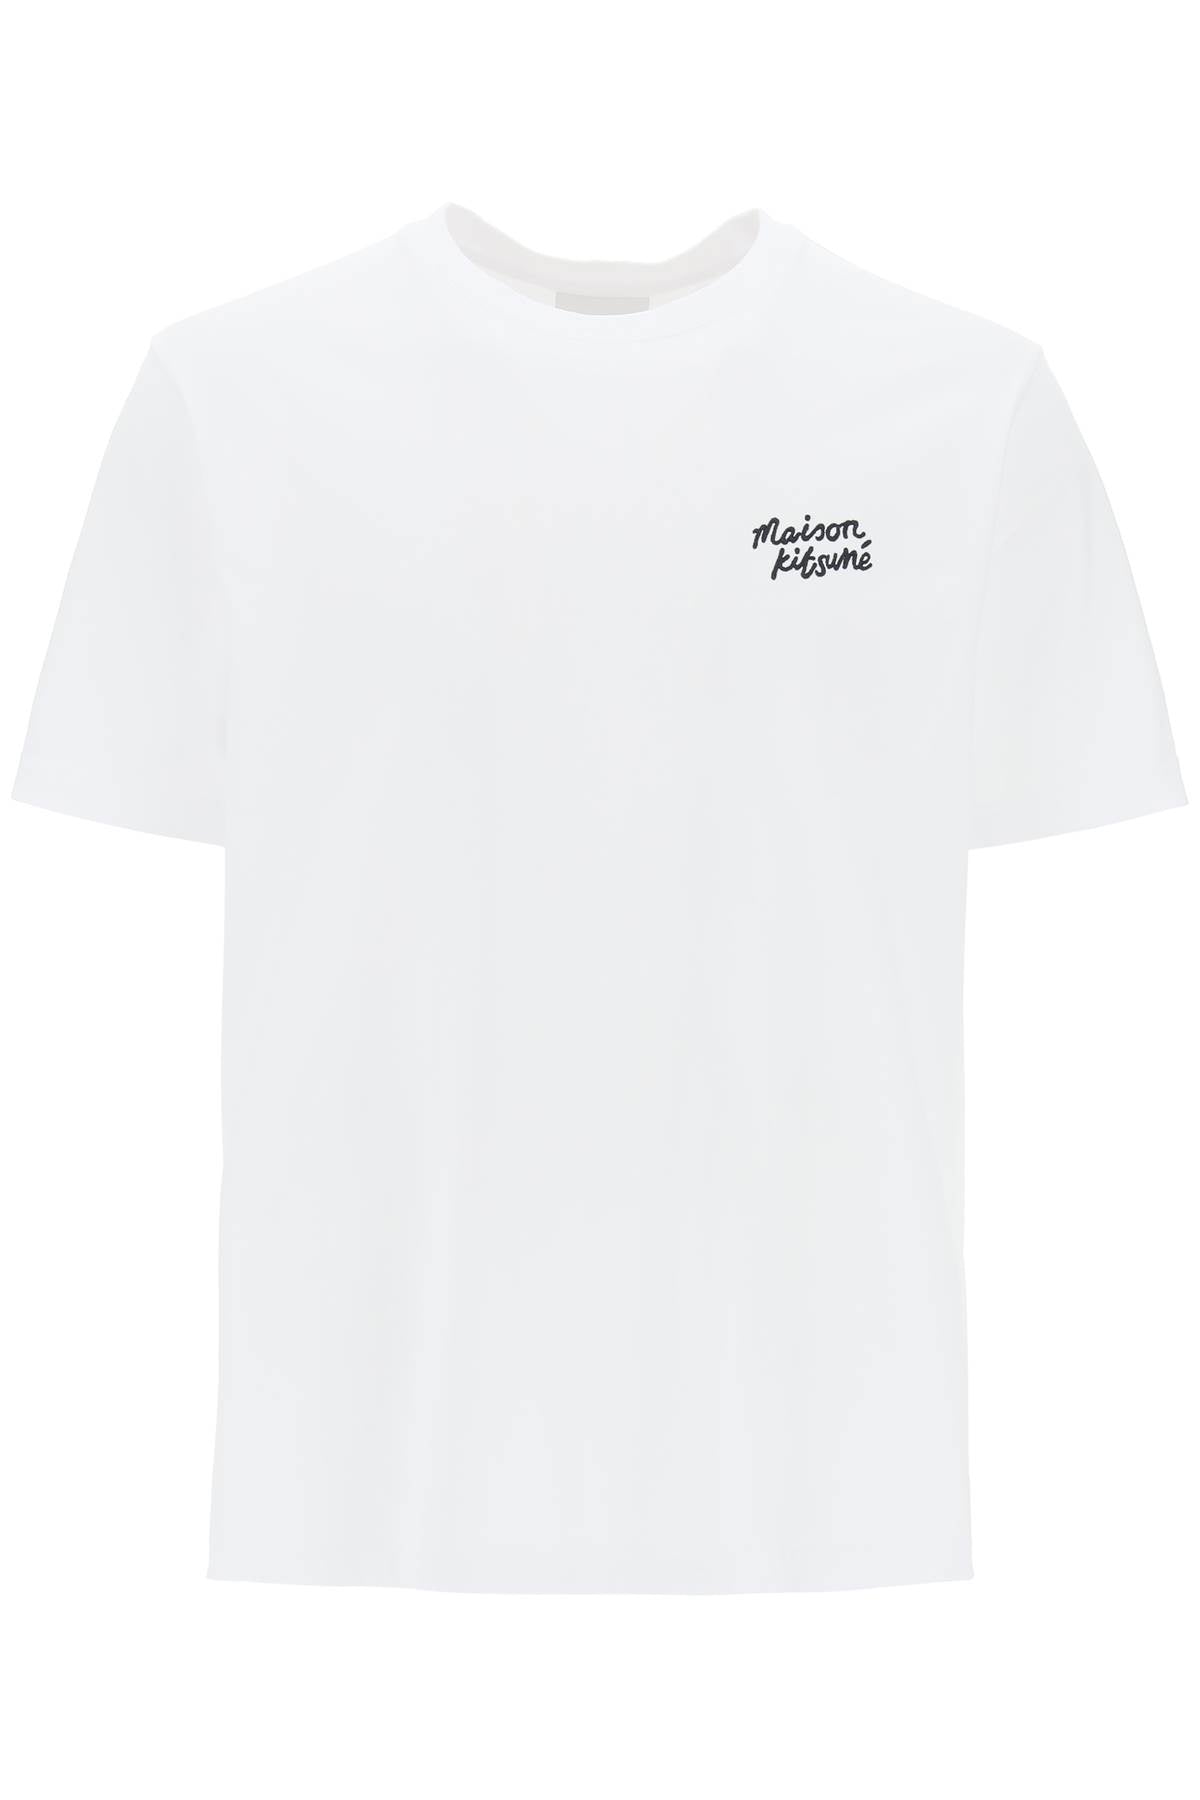 Maison kitsune t-shirt with logo lettering-0